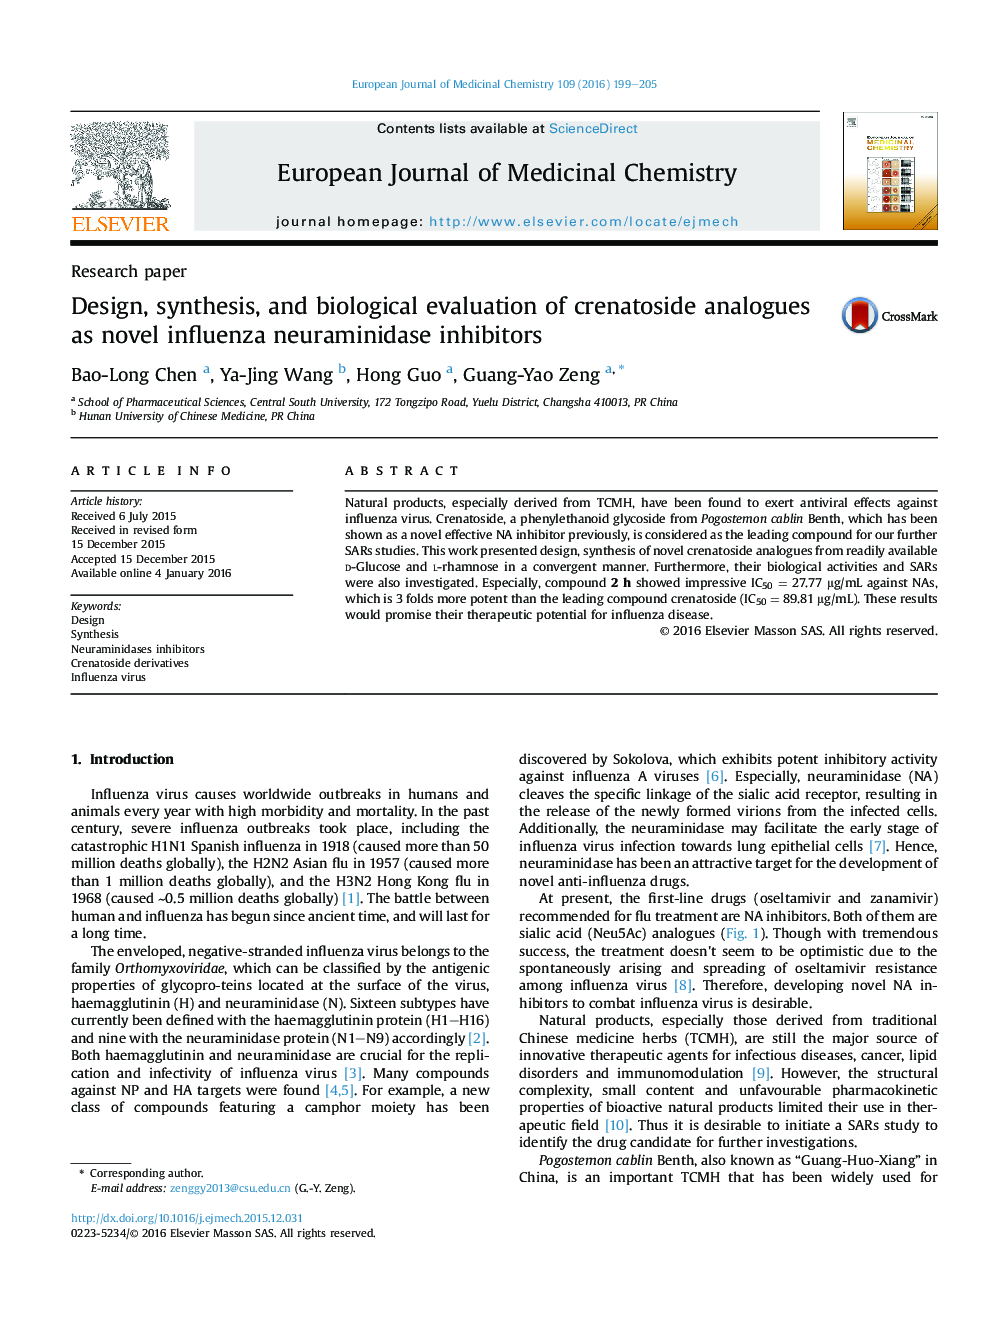 Design, synthesis, and biological evaluation of crenatoside analogues as novel influenza neuraminidase inhibitors